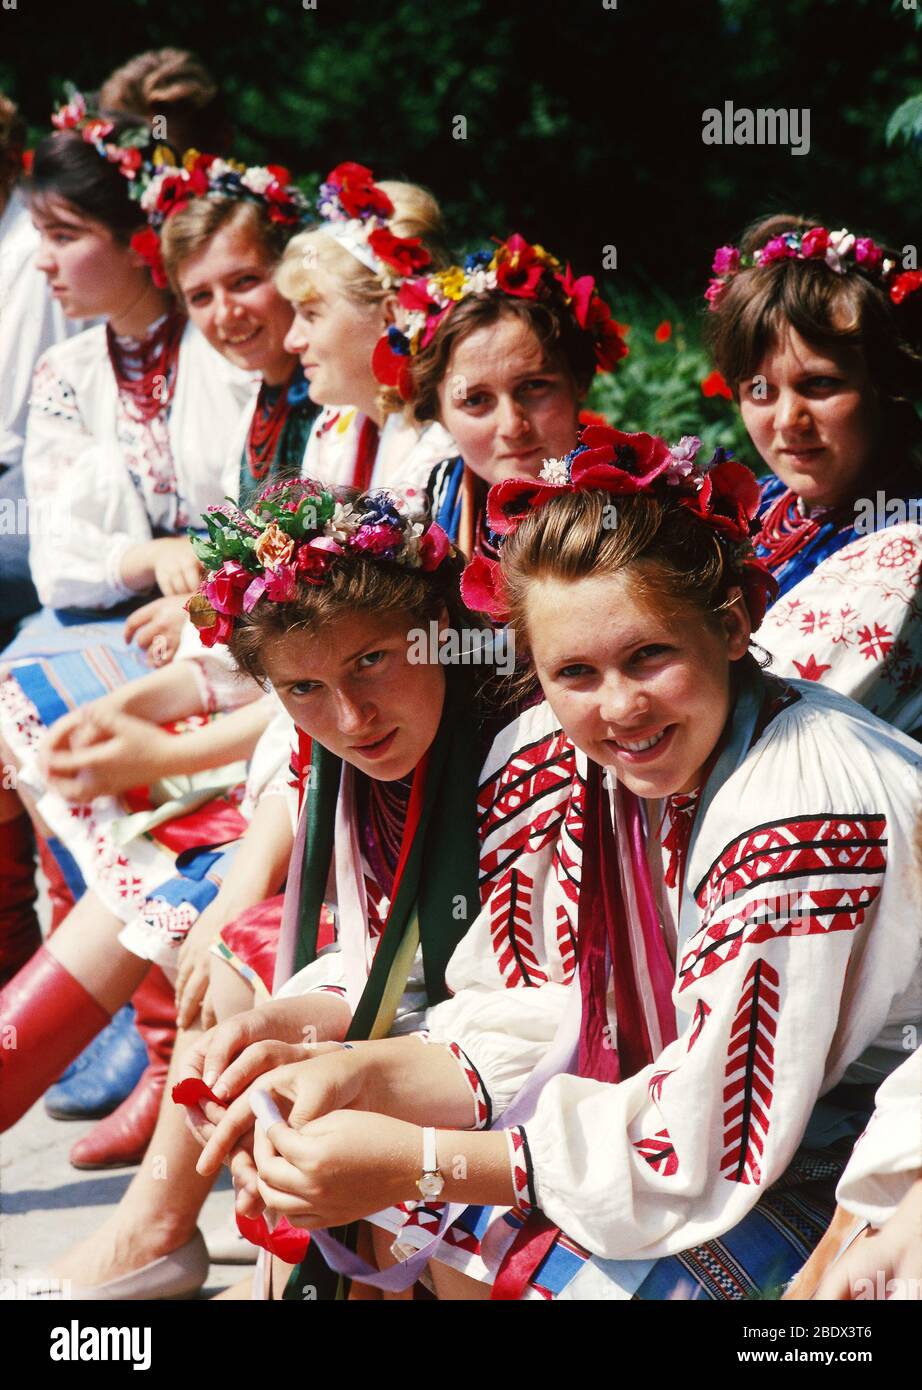 Native costumes, Ukraine Stock Photo